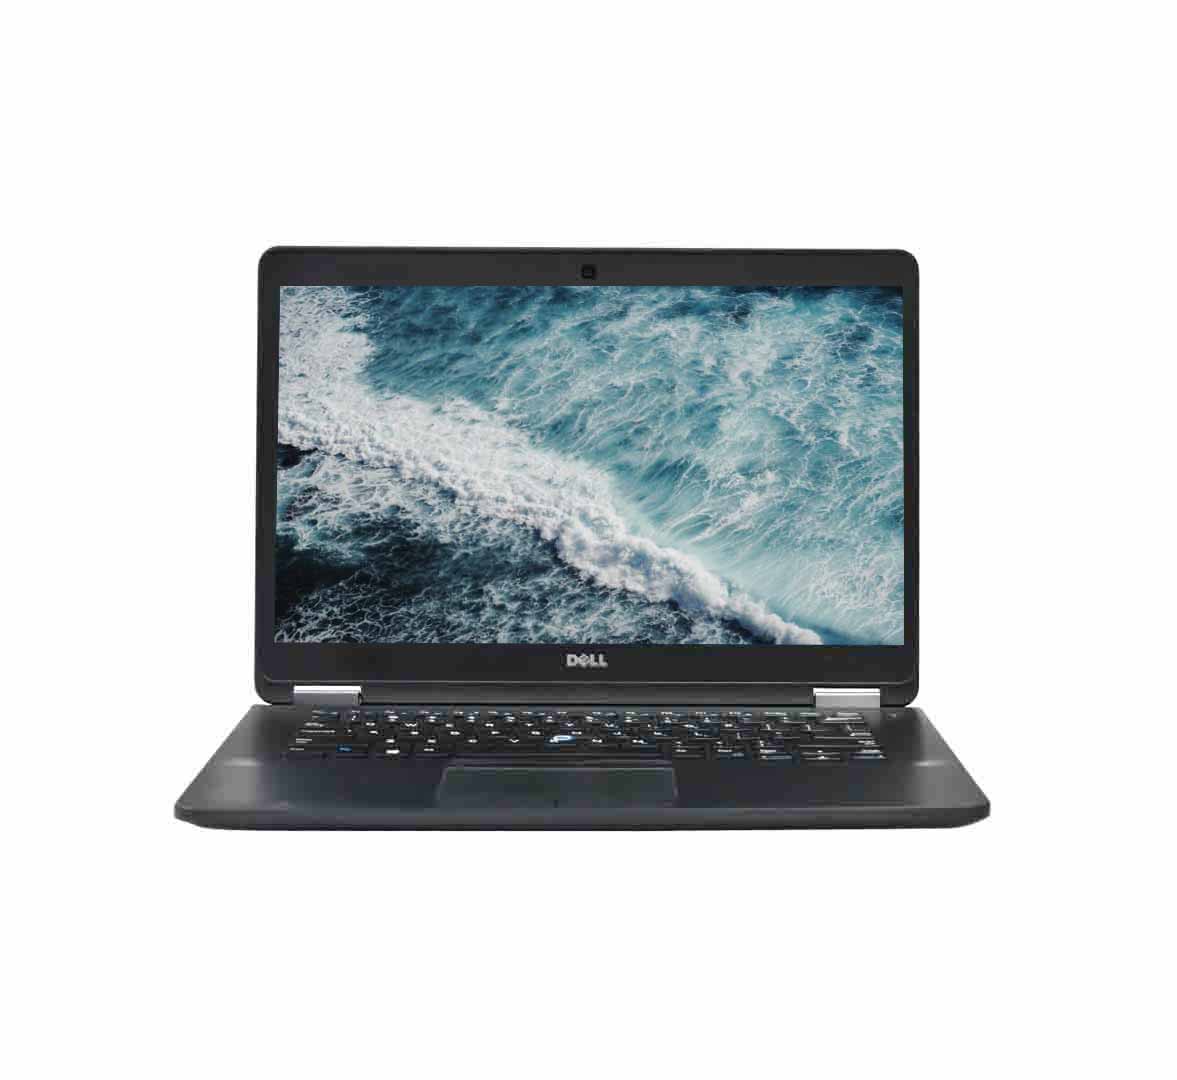 Dell Latitude E7470 Business Laptop, Intel Core i7-6th Gen. CPU, 16GB RAM, 256GB SSD, 14 inch Touchscreen, Windows 10 Pro, Refurbished Laptop